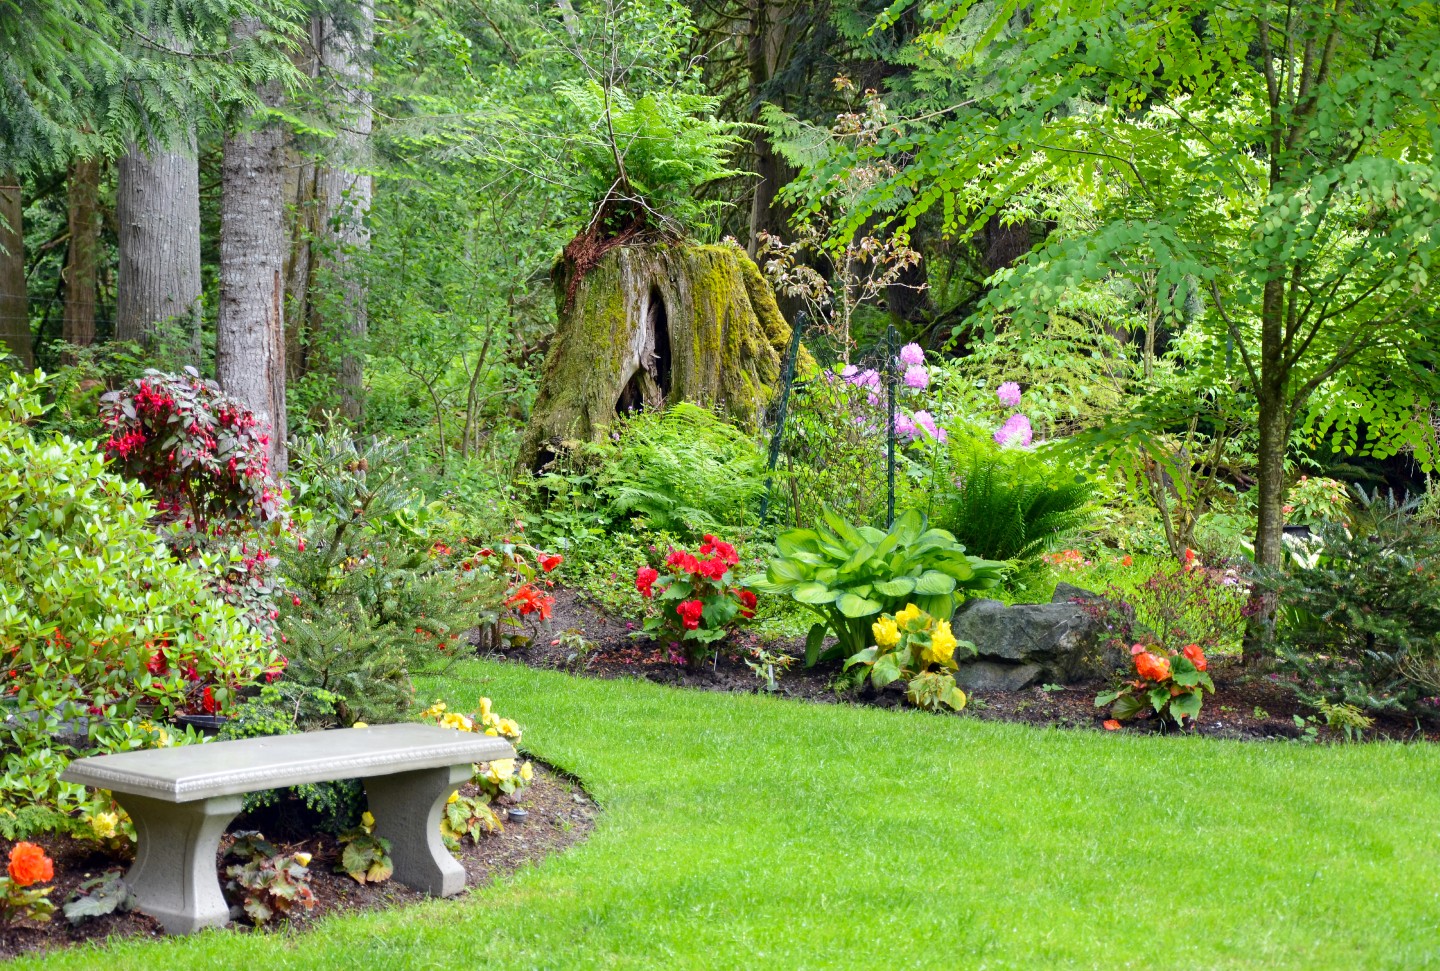 Residential Landscape design flowers trees shrubs irrigation Landscaping MD LLC Vancouver Washington